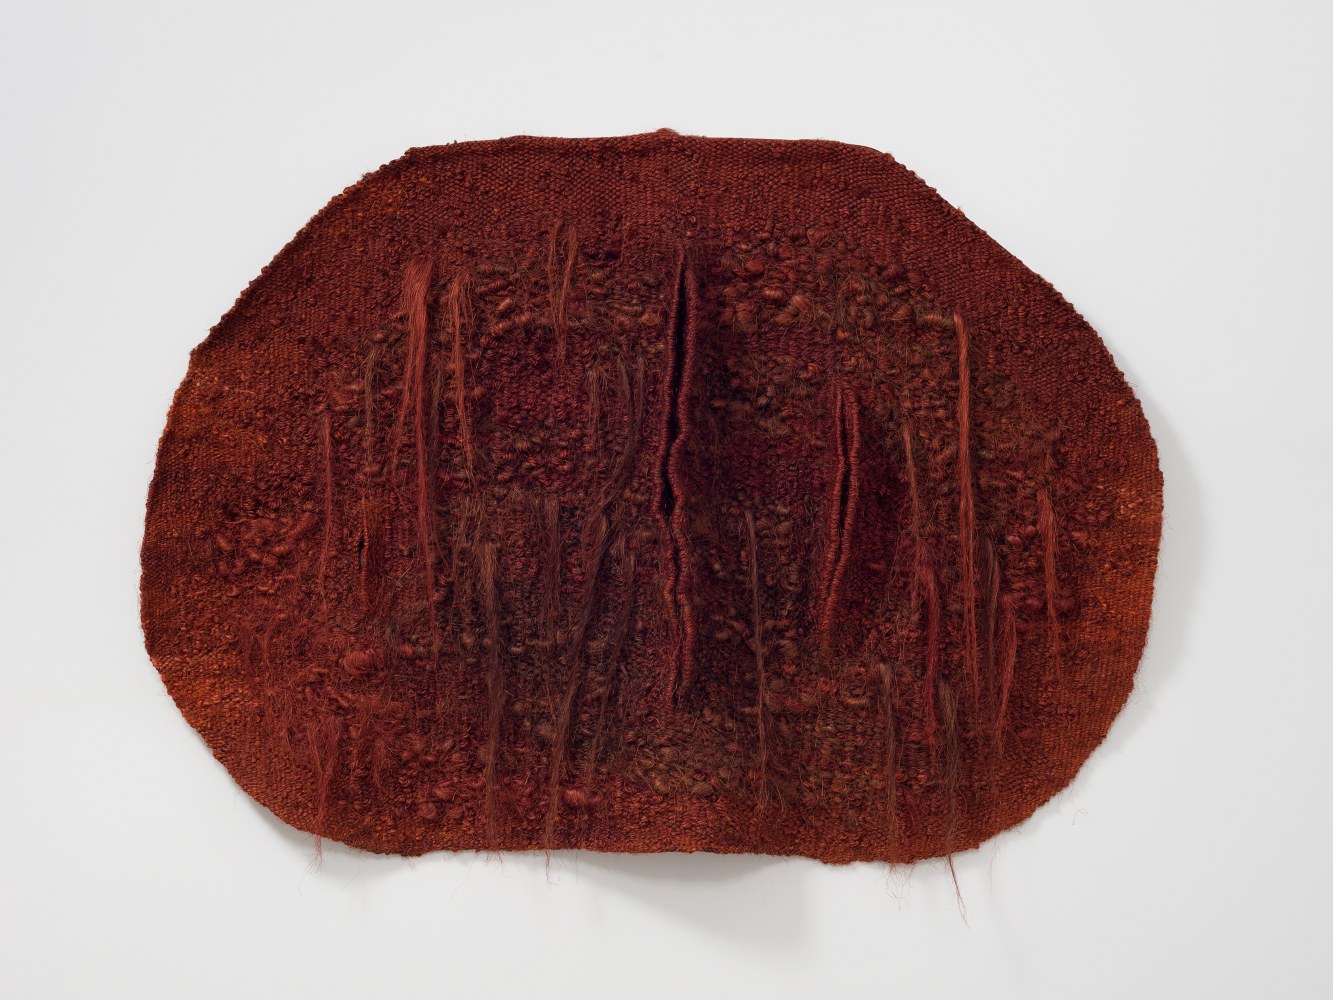 Magdalena Abakanowicz

Untitled Abakan, 1971-1972&amp;nbsp;&amp;nbsp;
sisal weaving
55 7/8 x 85 3/8 x 6 1/4 in. / 142 x 217 x 16 cm